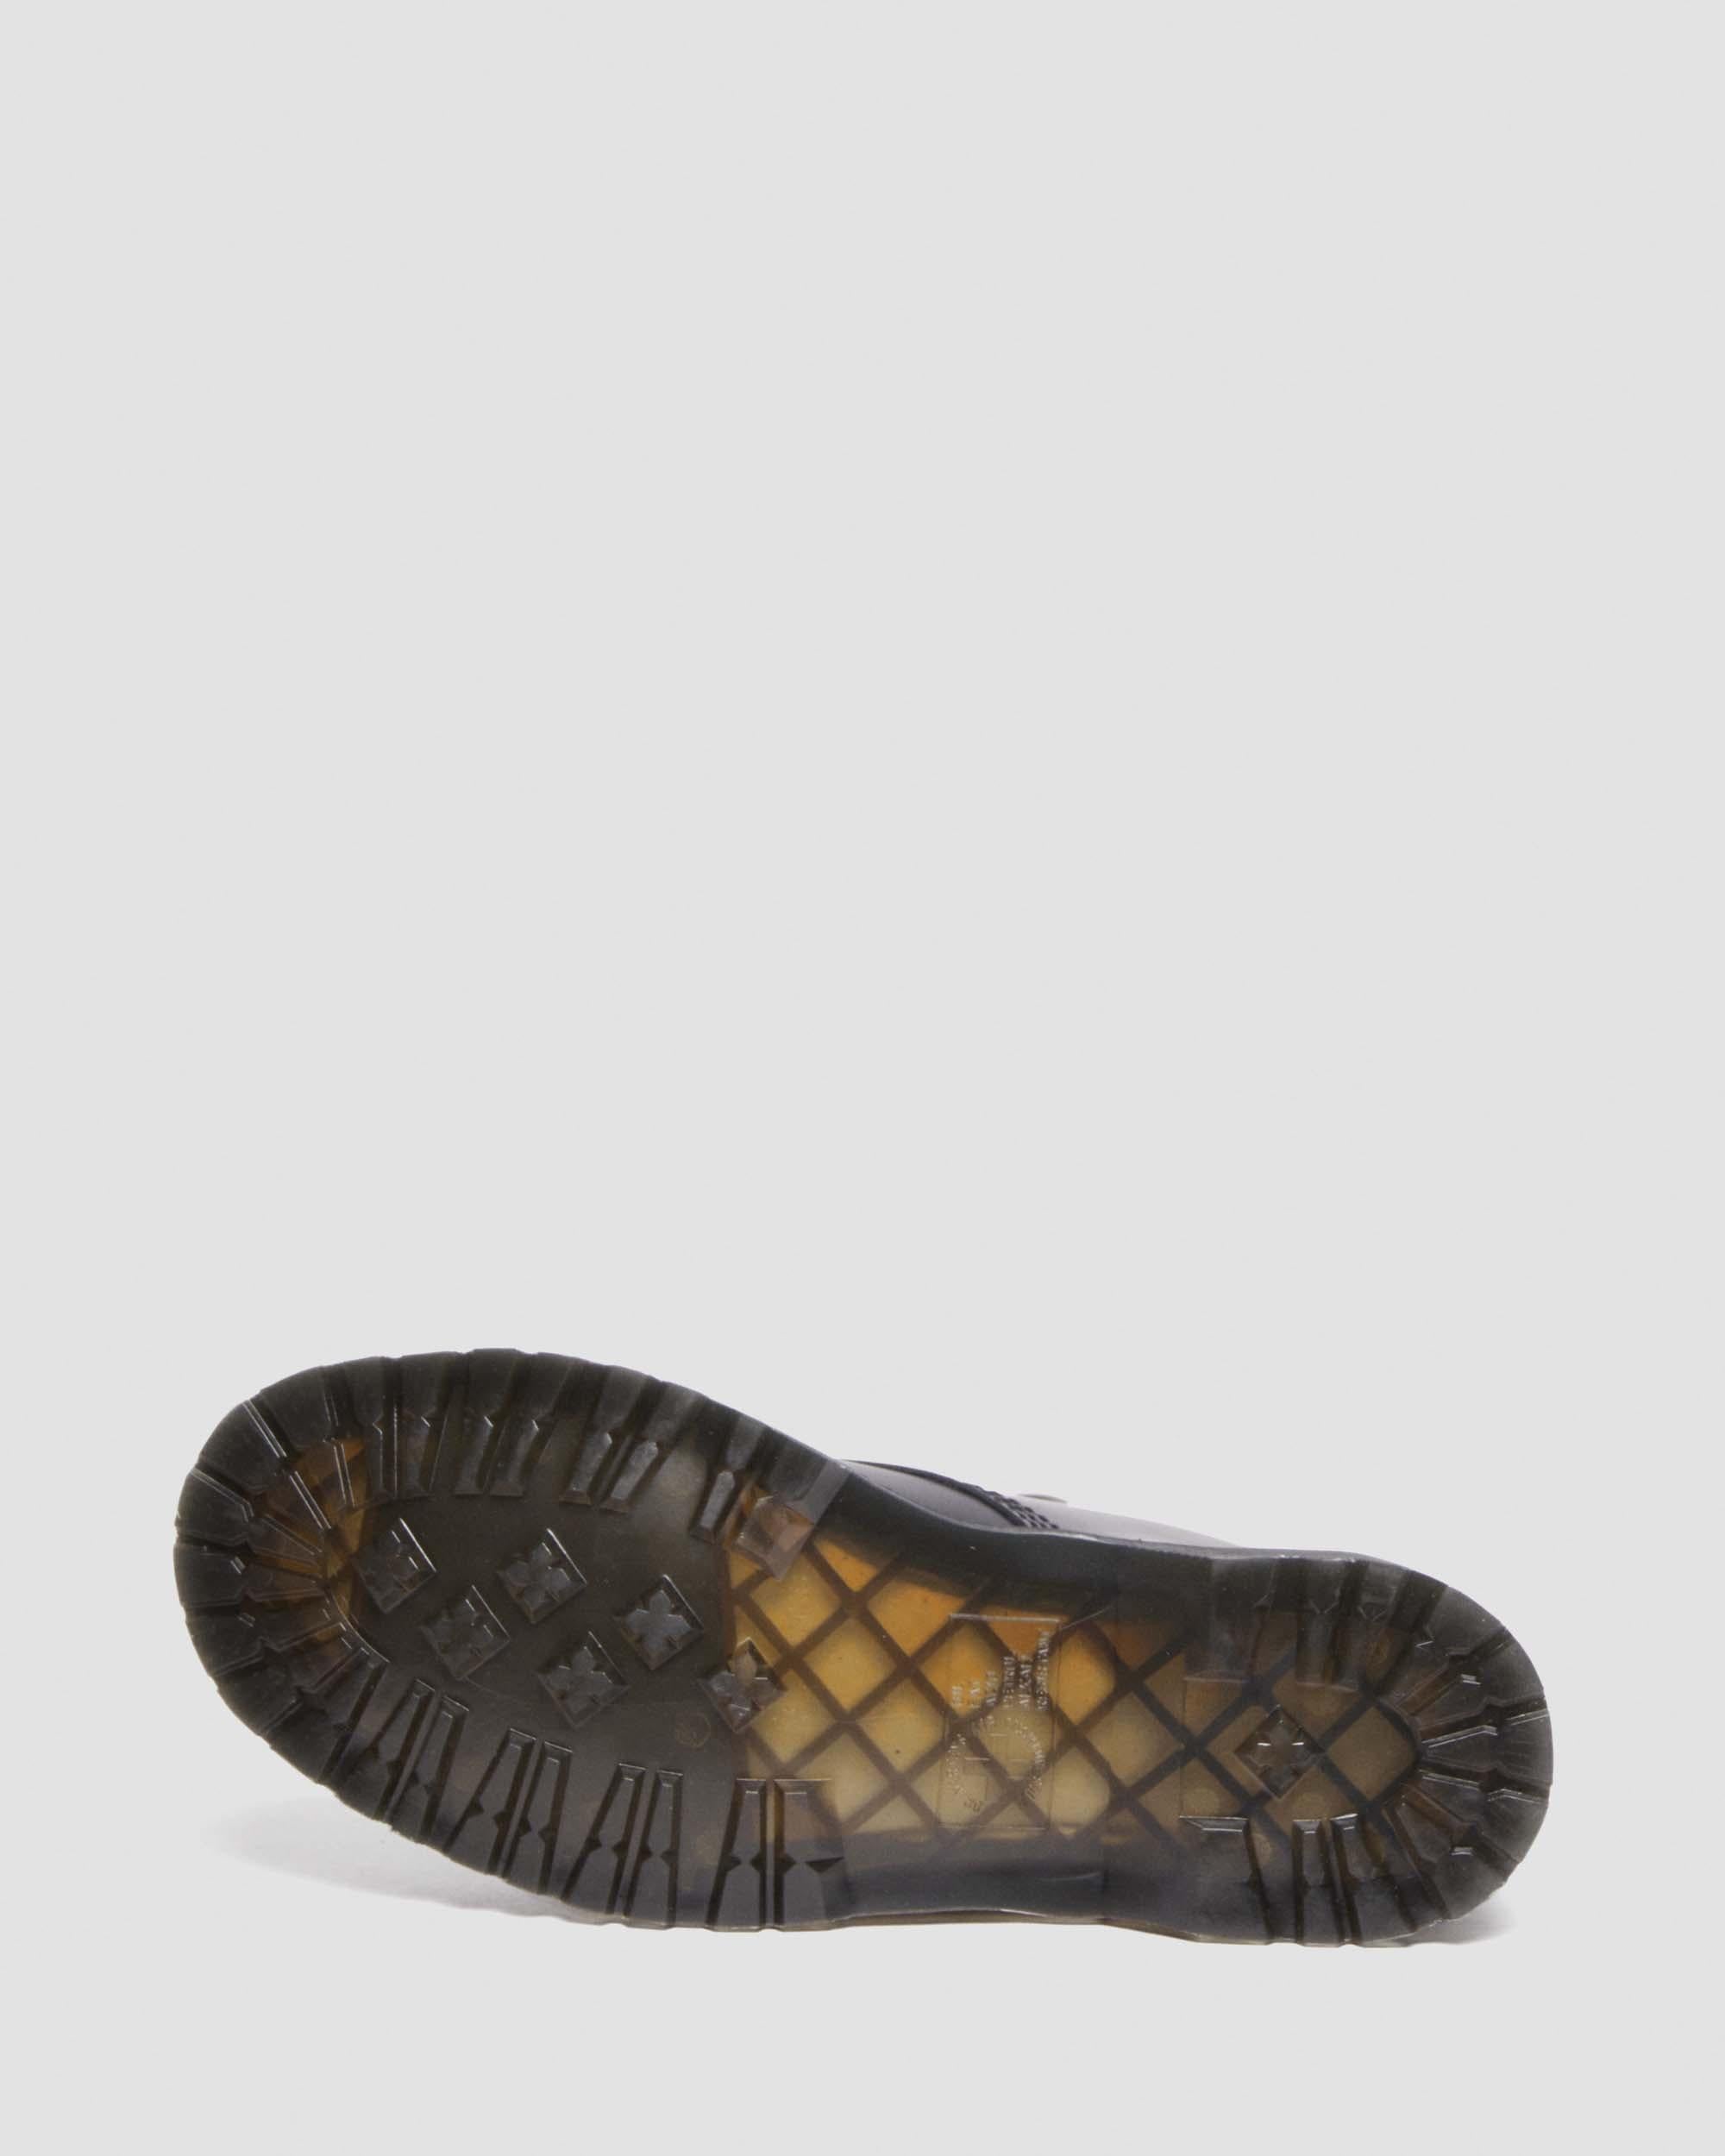 1460 Danuibo Leather Boots